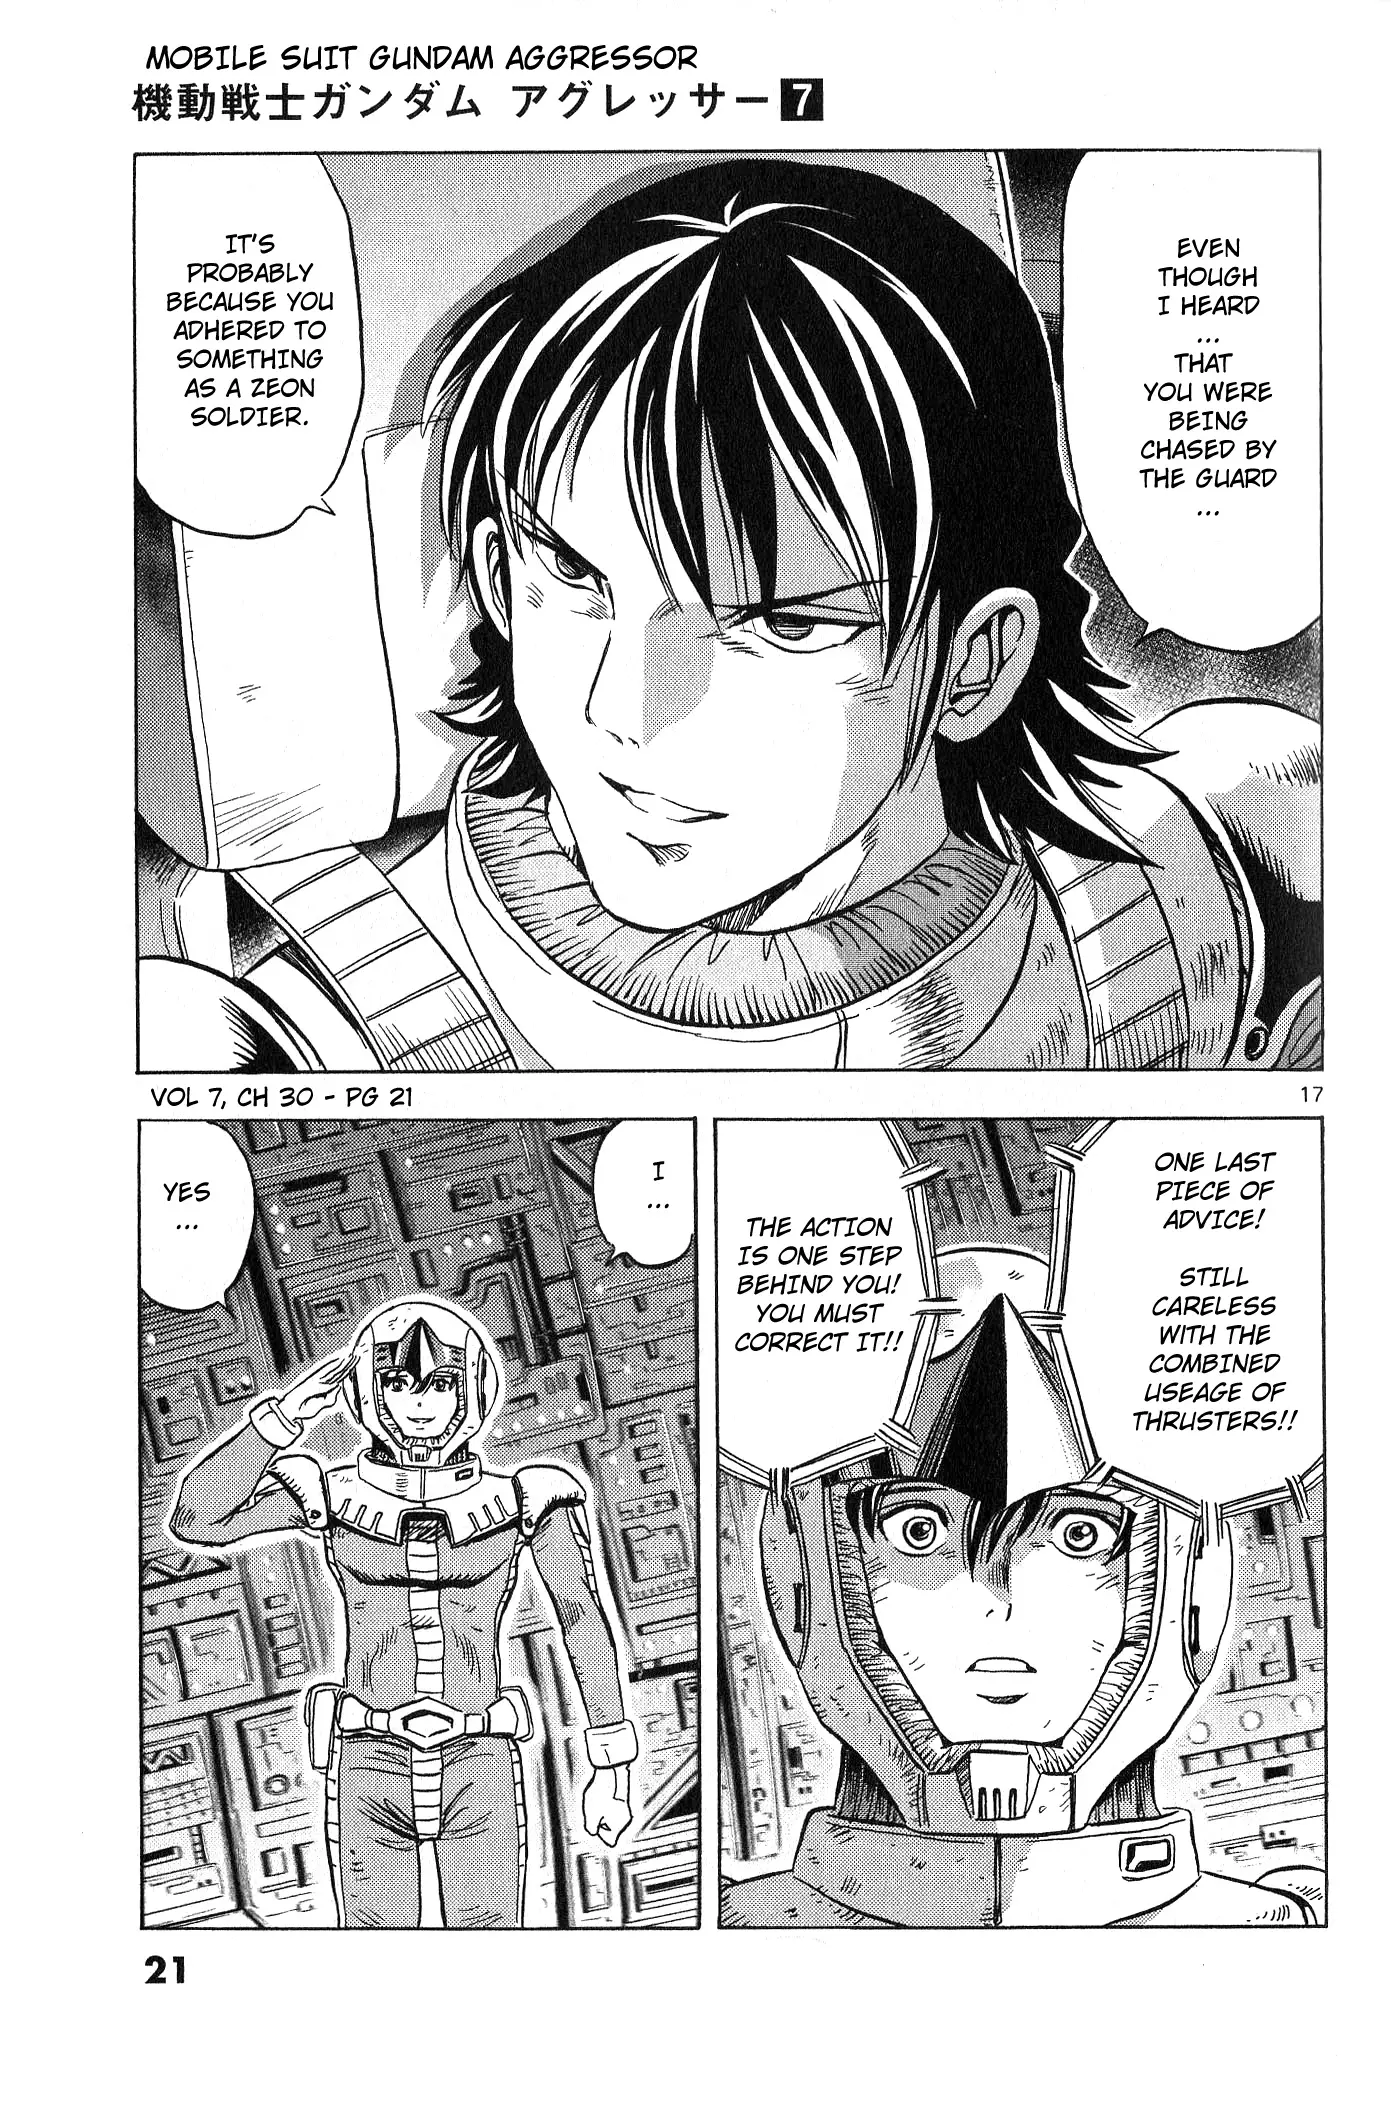 Mobile Suit Gundam Aggressor - 30 page 16-2923ca5d